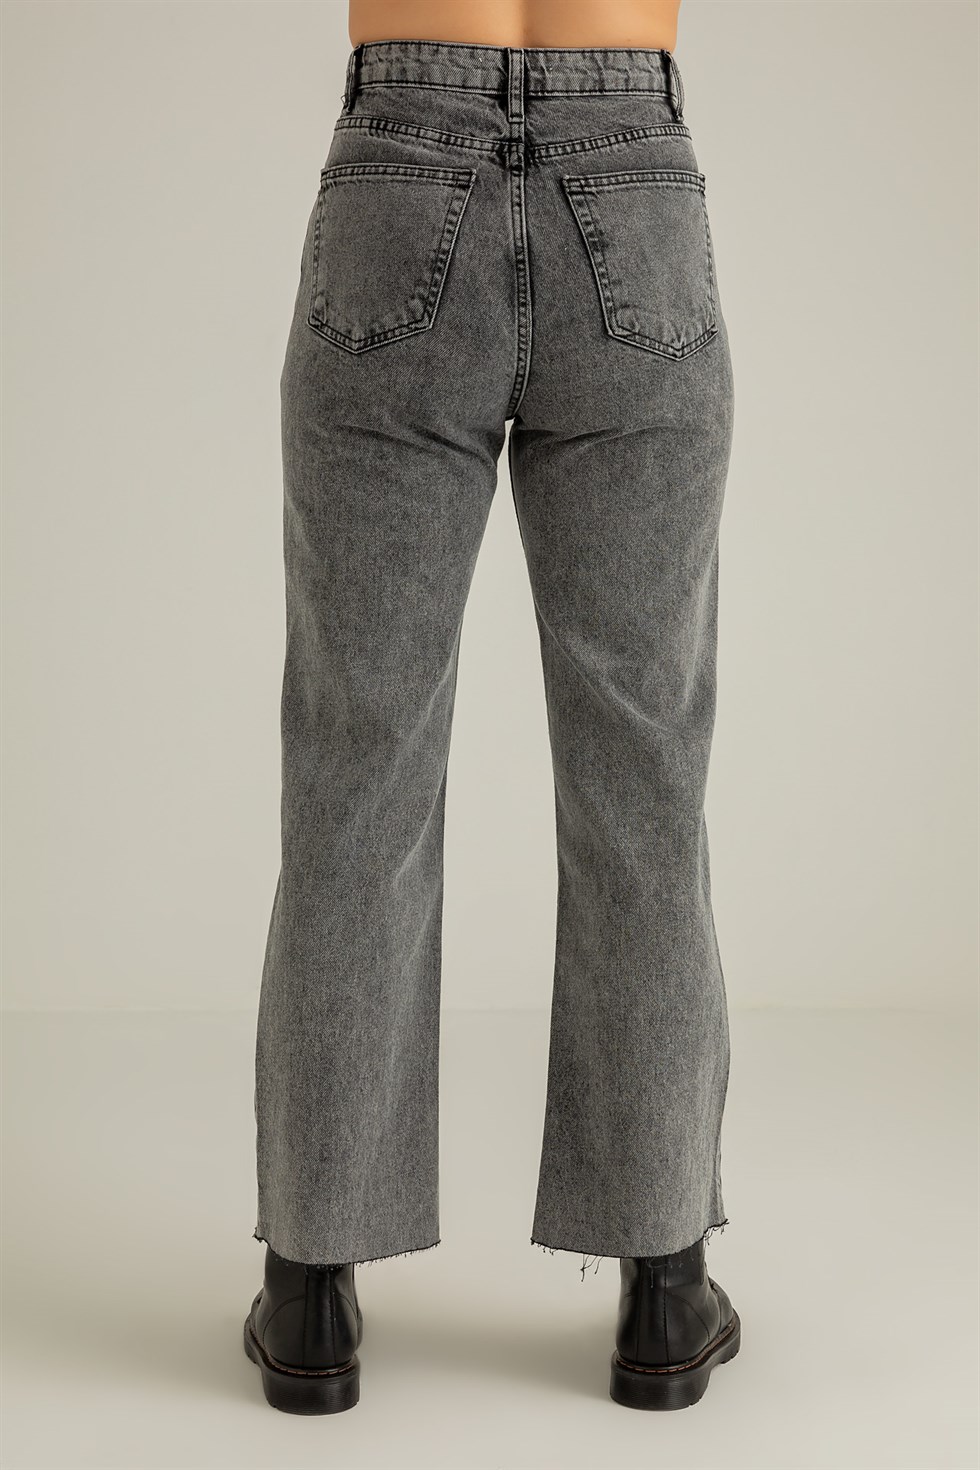 Deniz Butik Straight Jeans - FÜME. 6